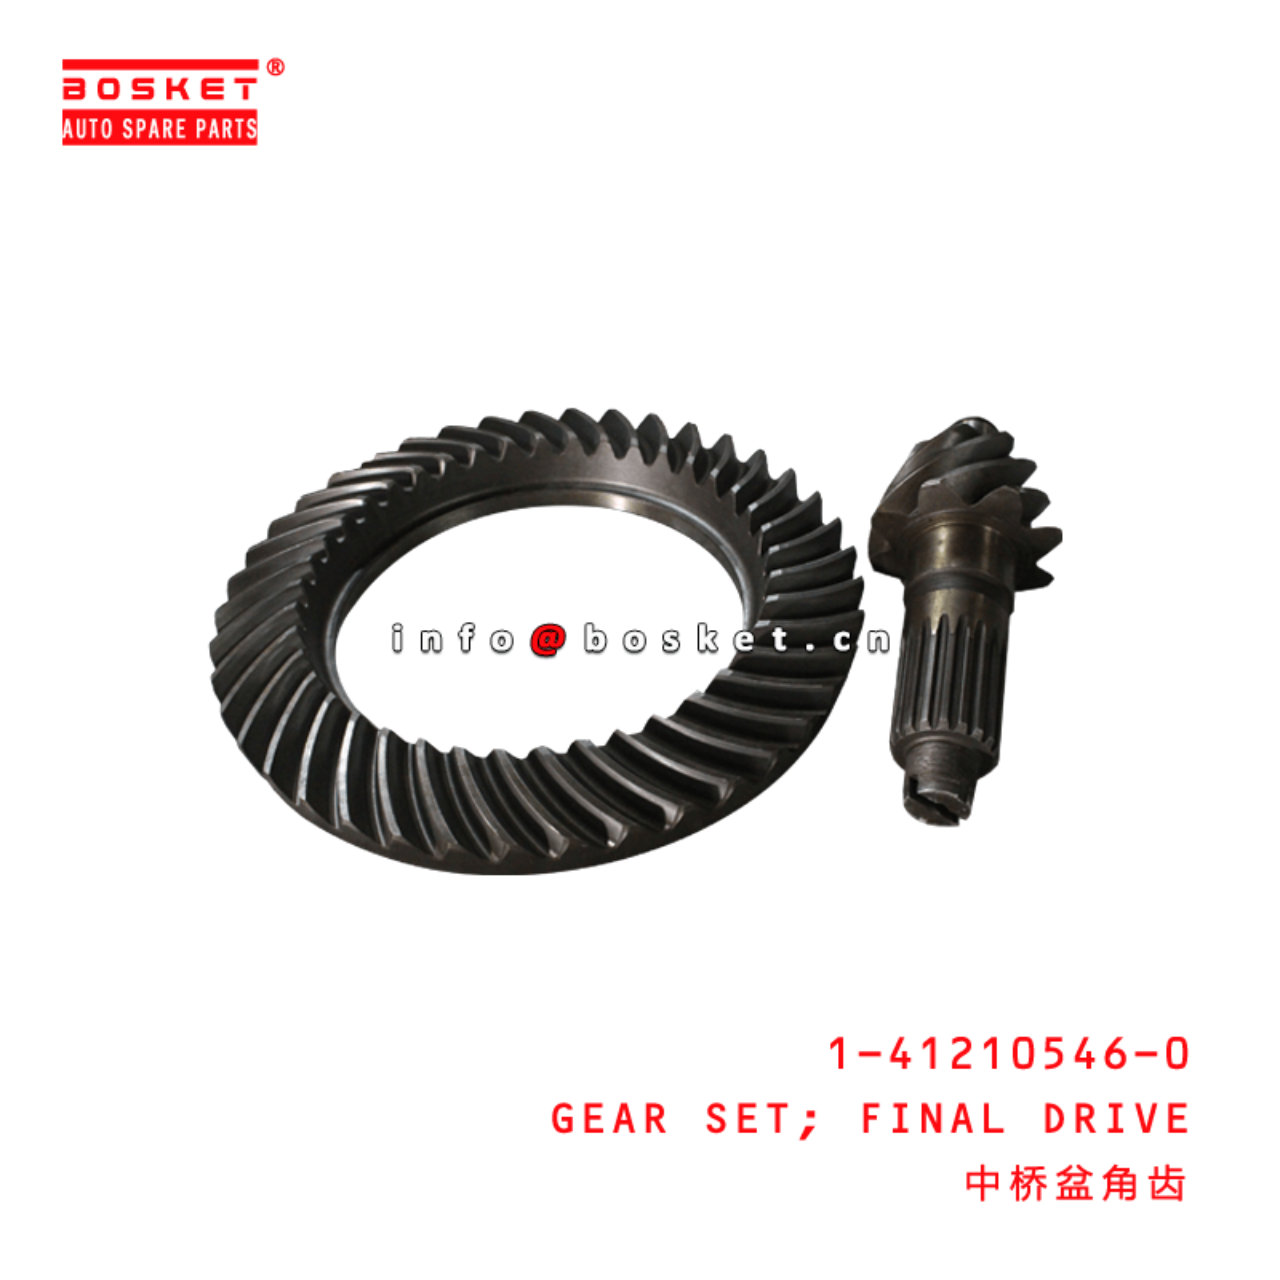  1-41210546-0 Final Drive Gear Set 1412105460 Suitable for ISUZU CXZ CYZ